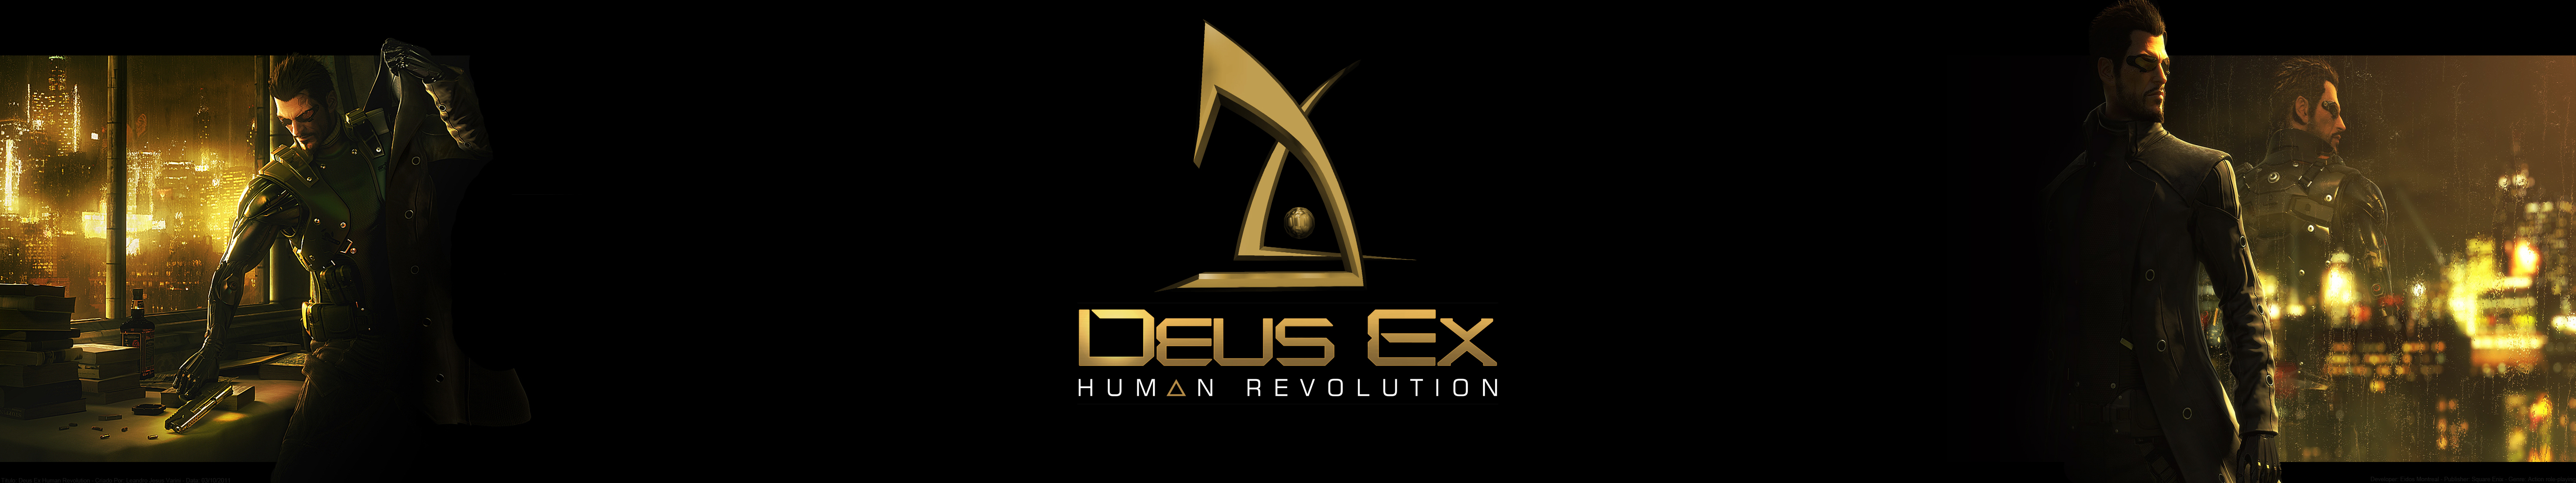 Video Game Deus Ex Human Revolution 5760x1080